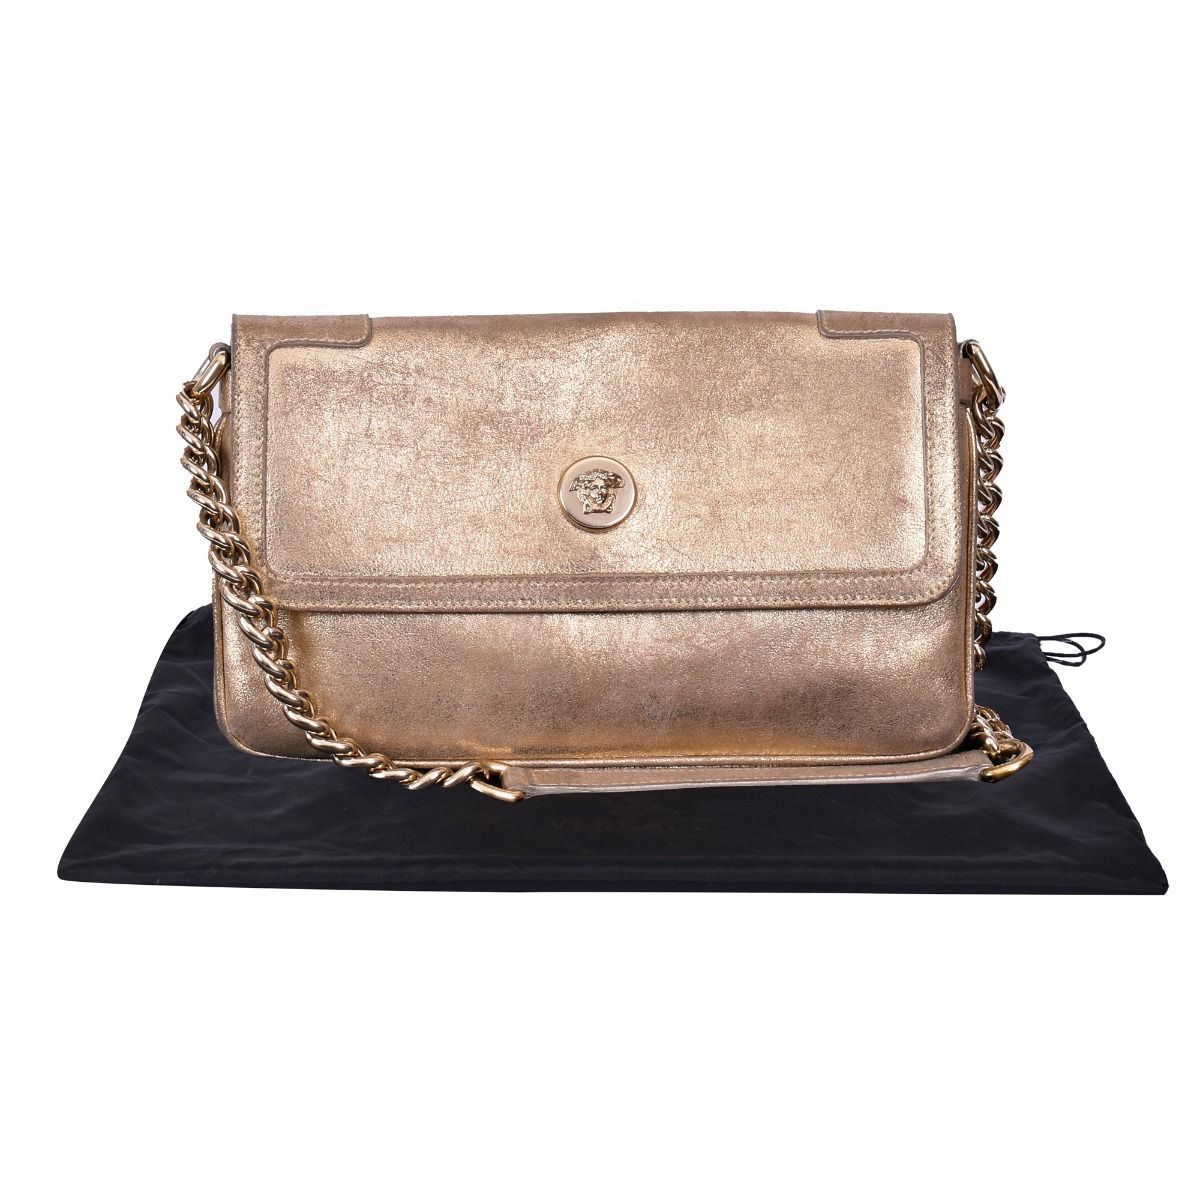 Versace Outlet mini bag for women  Black  Versace mini bag DBFH523 D5VIT  online on GIGLIOCOM